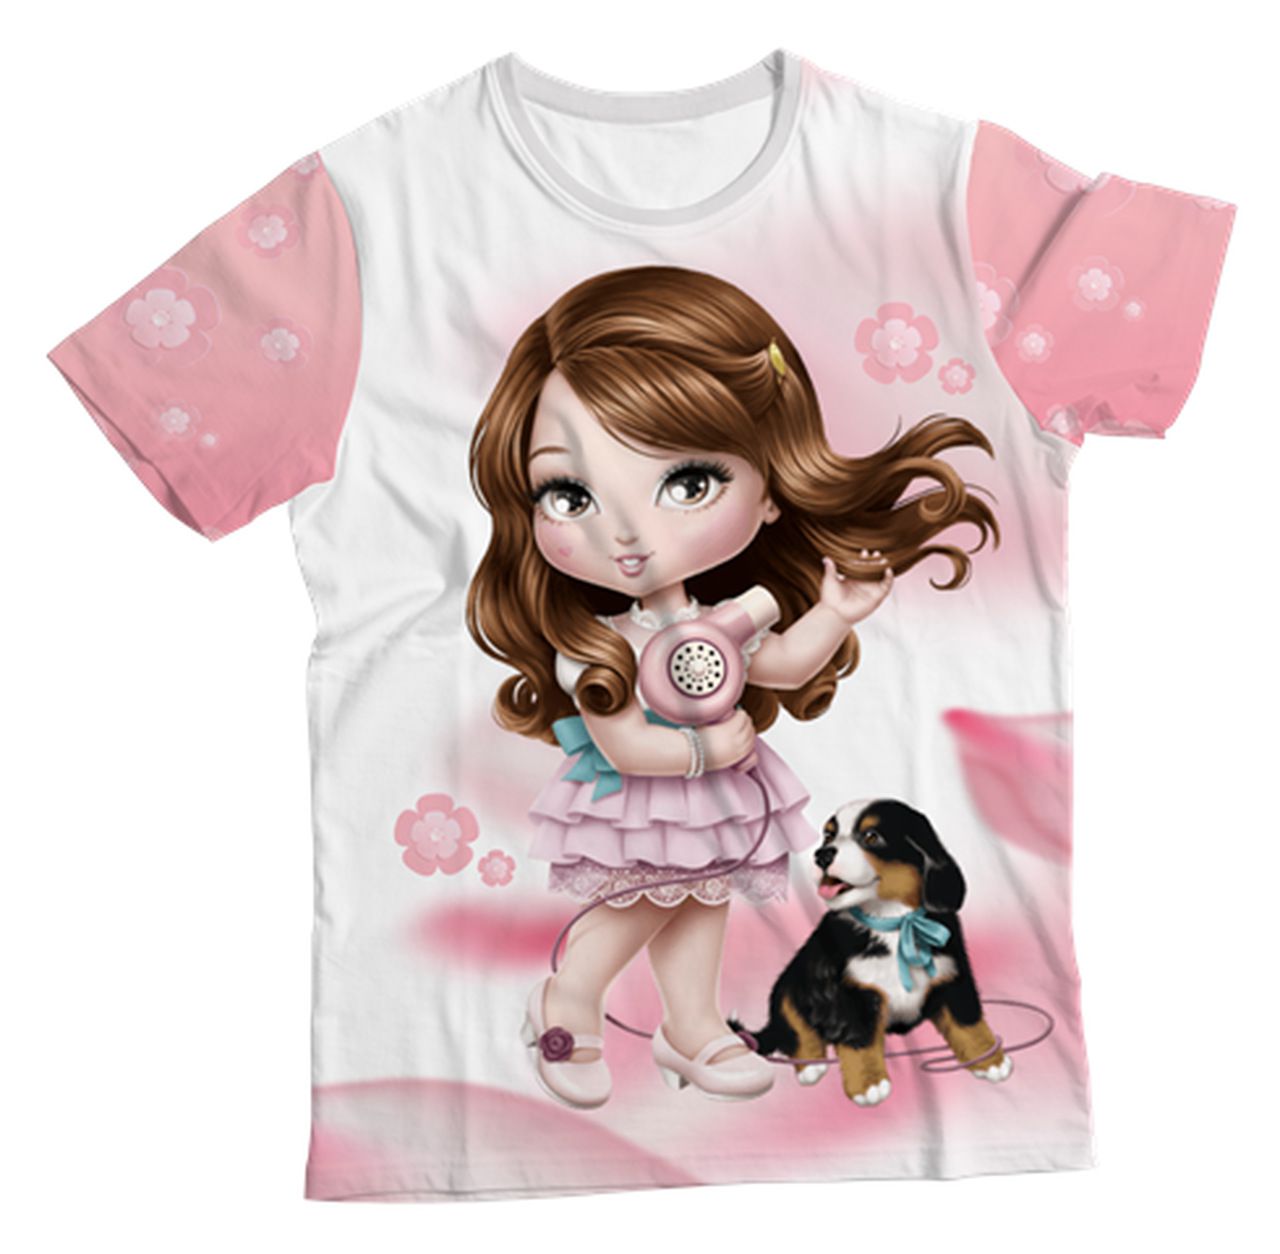 Camiseta Infantil Jolie Branca e Rosa MC